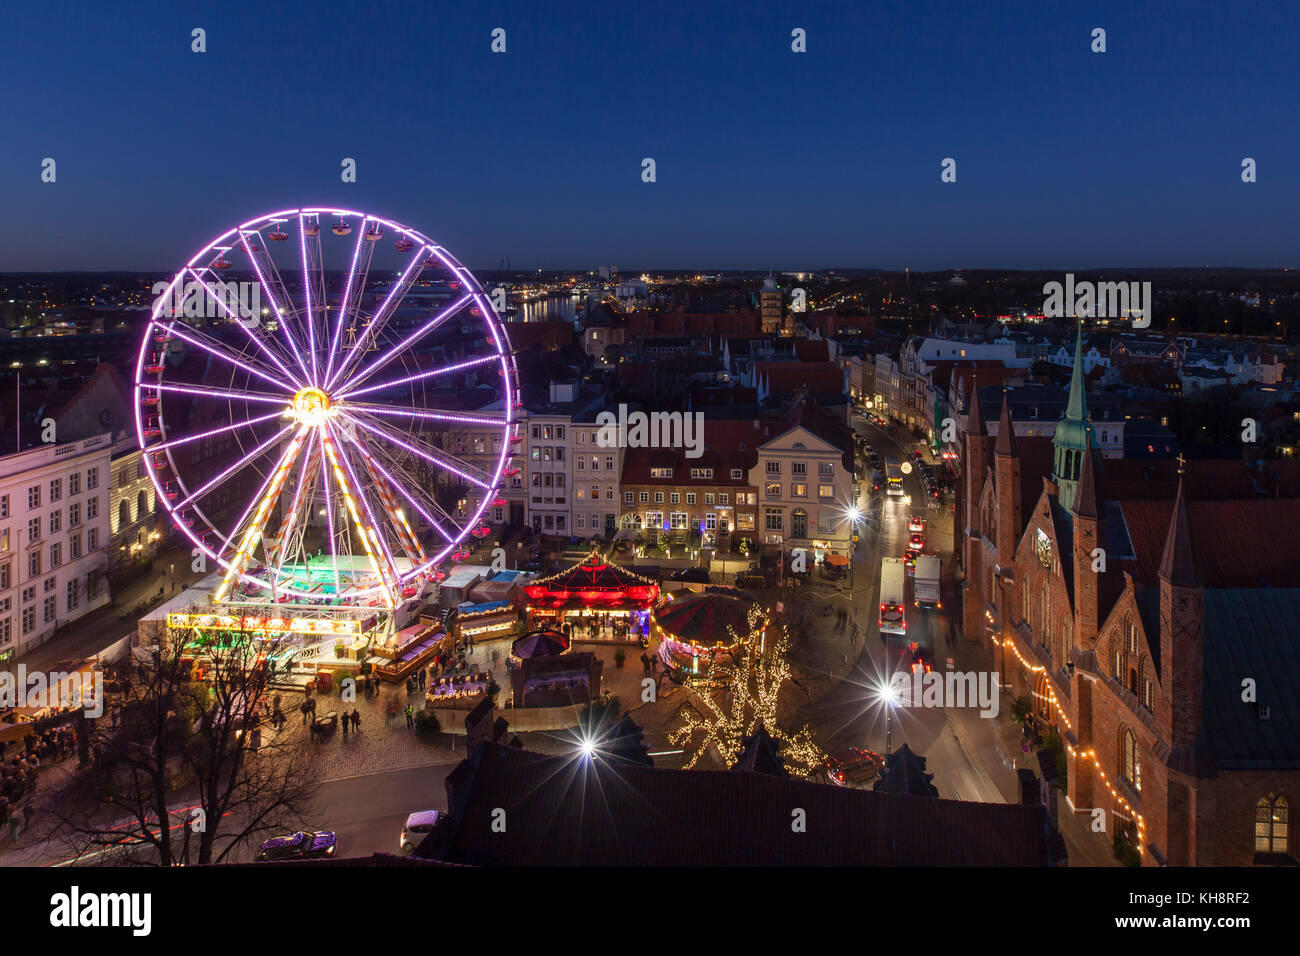 Illuminated Ferris wheel at evening Christmas market in winter at Koberg, Hanseatictown Luebeck, Germany Stock Photo